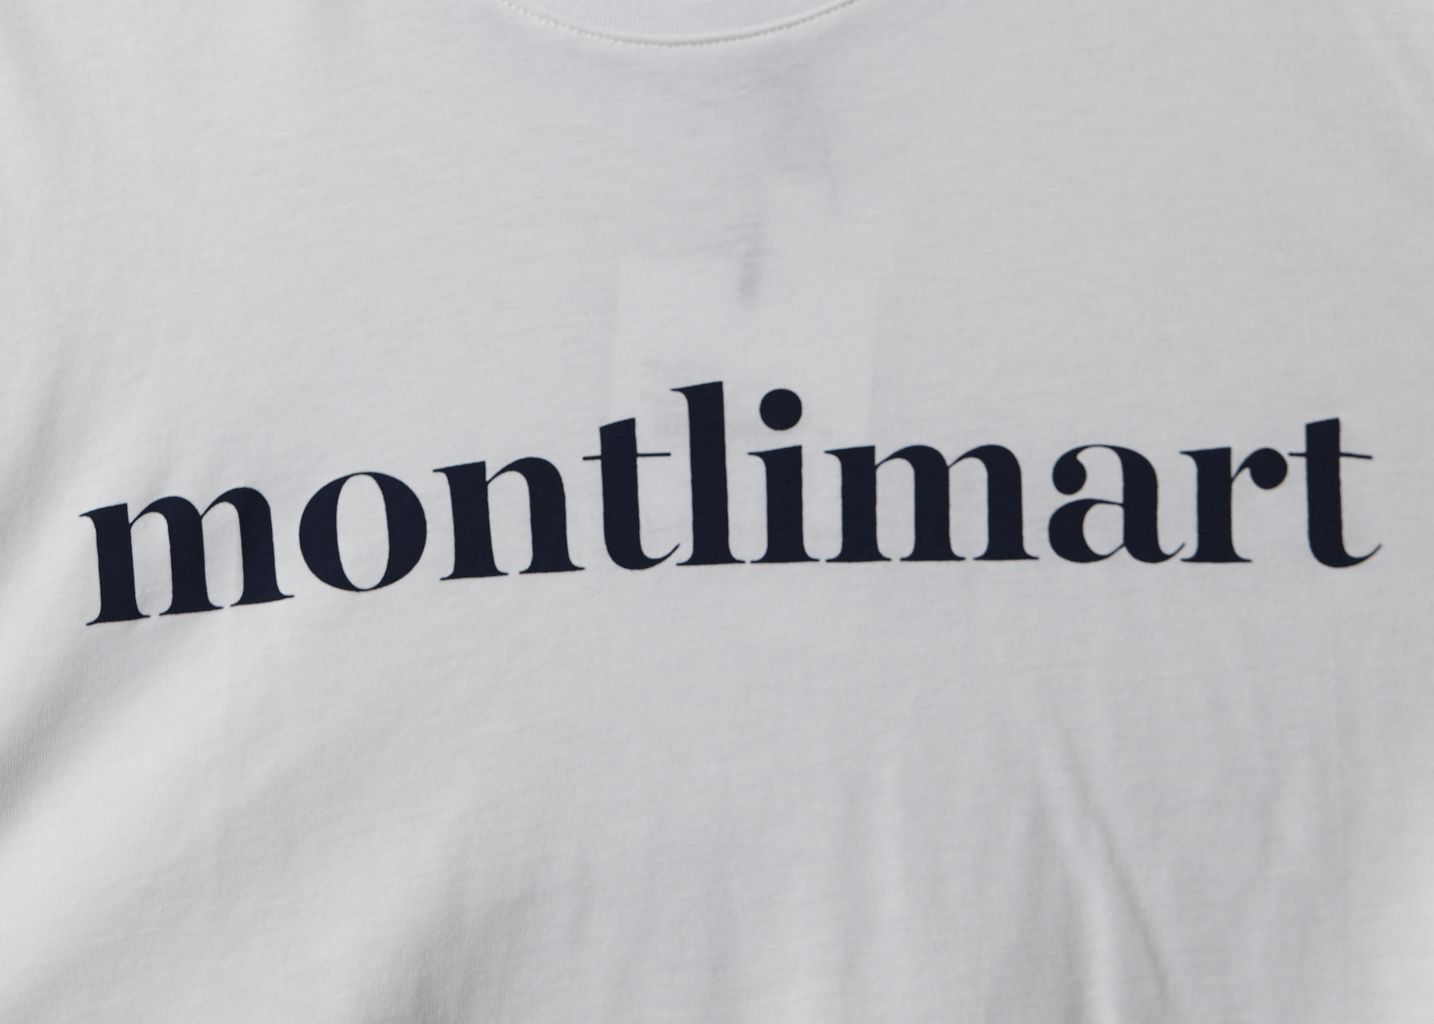 Villageois T-shirt - Montlimart